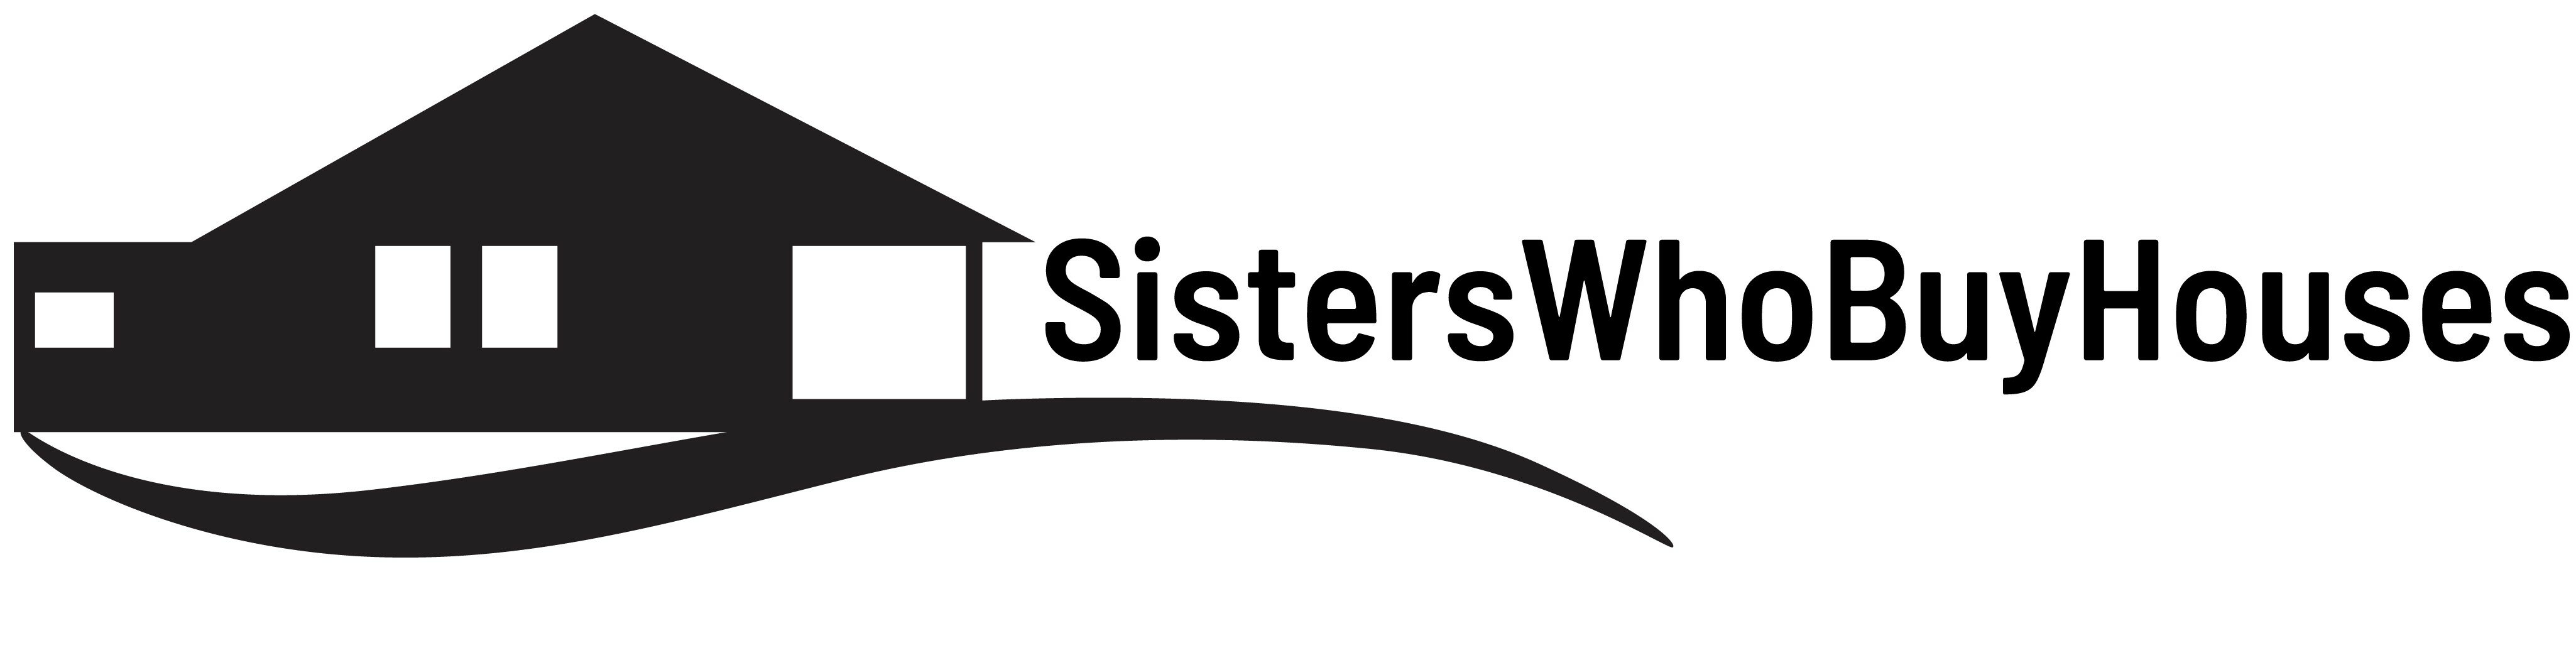 Sisters Who Buy Houses logo